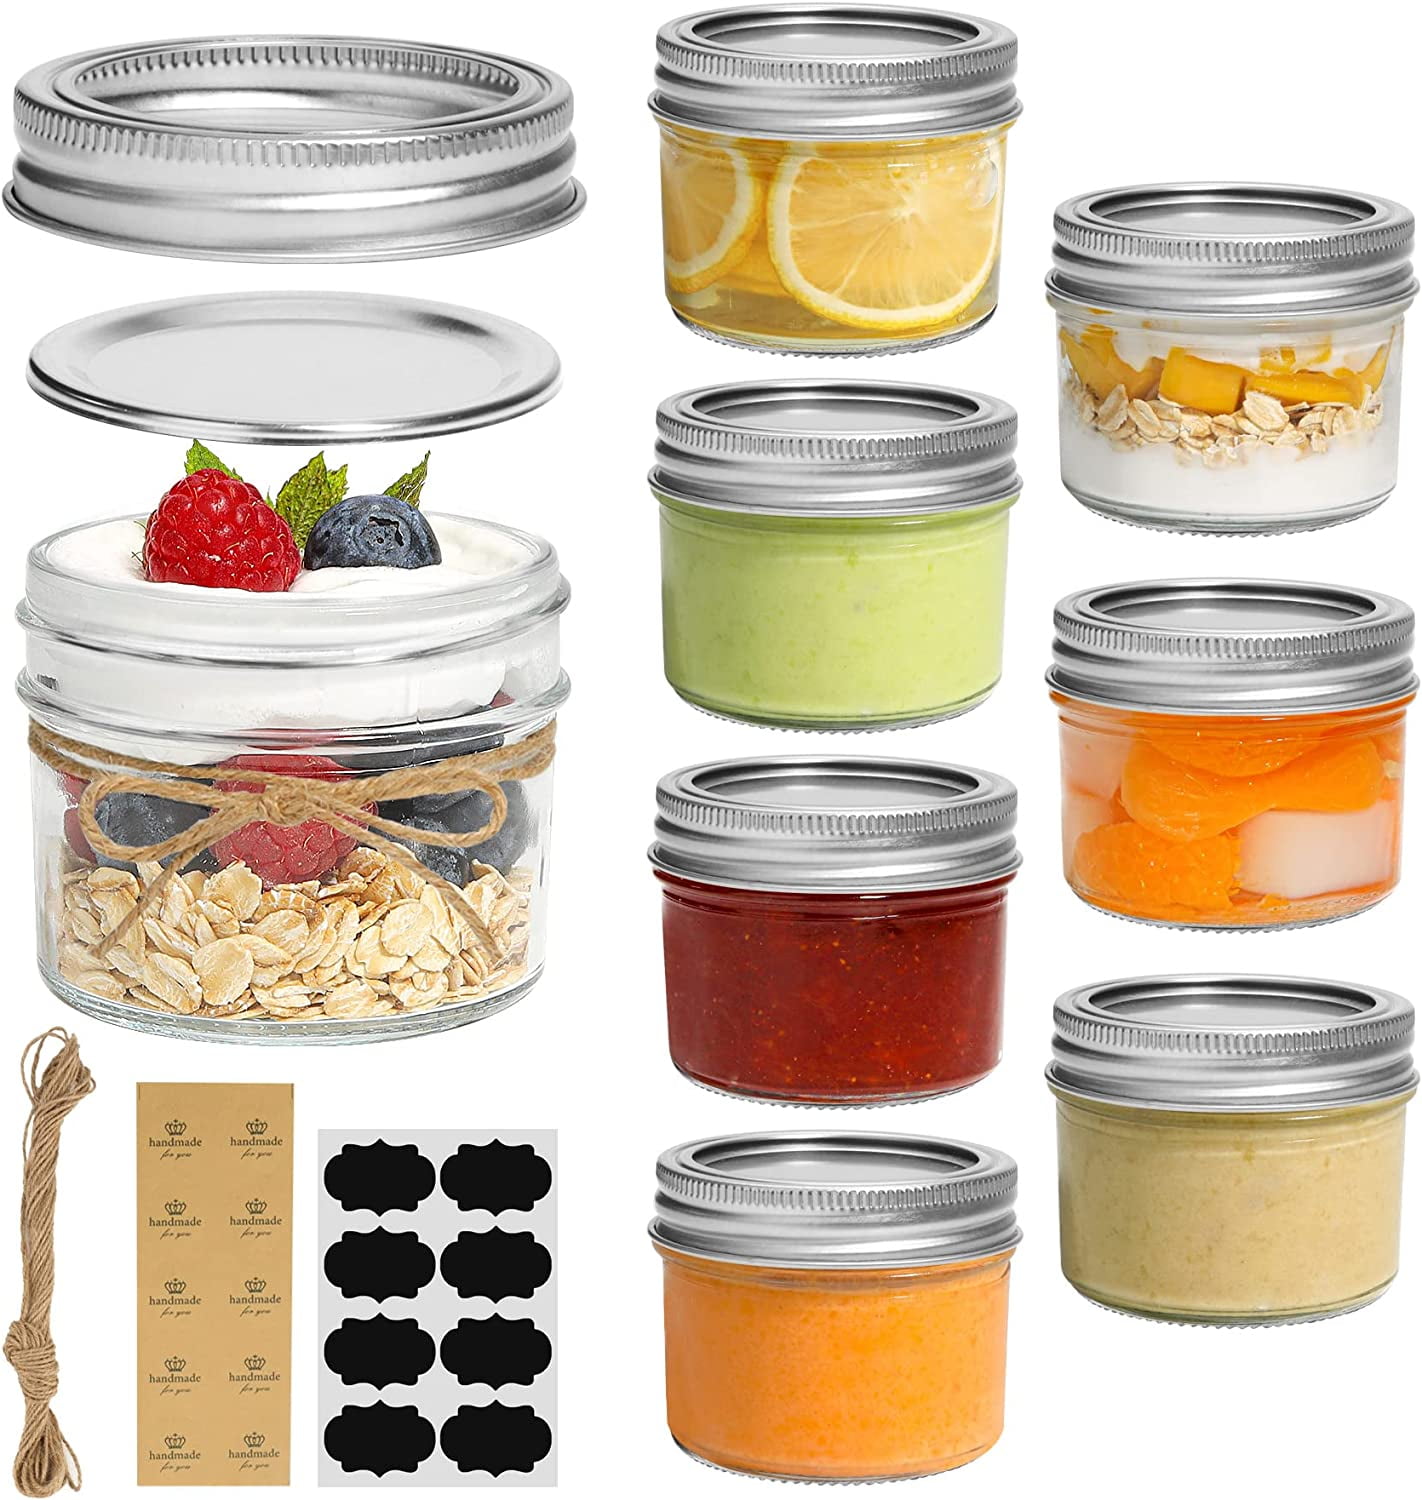 Mason Jars, 8 oz Mason Jars Canning Jars Jelly Jars with Regular Lids and Bands, Ideal for Jam, Honey, Wedding Favors, Shower Favors, Baby Foods, DIY